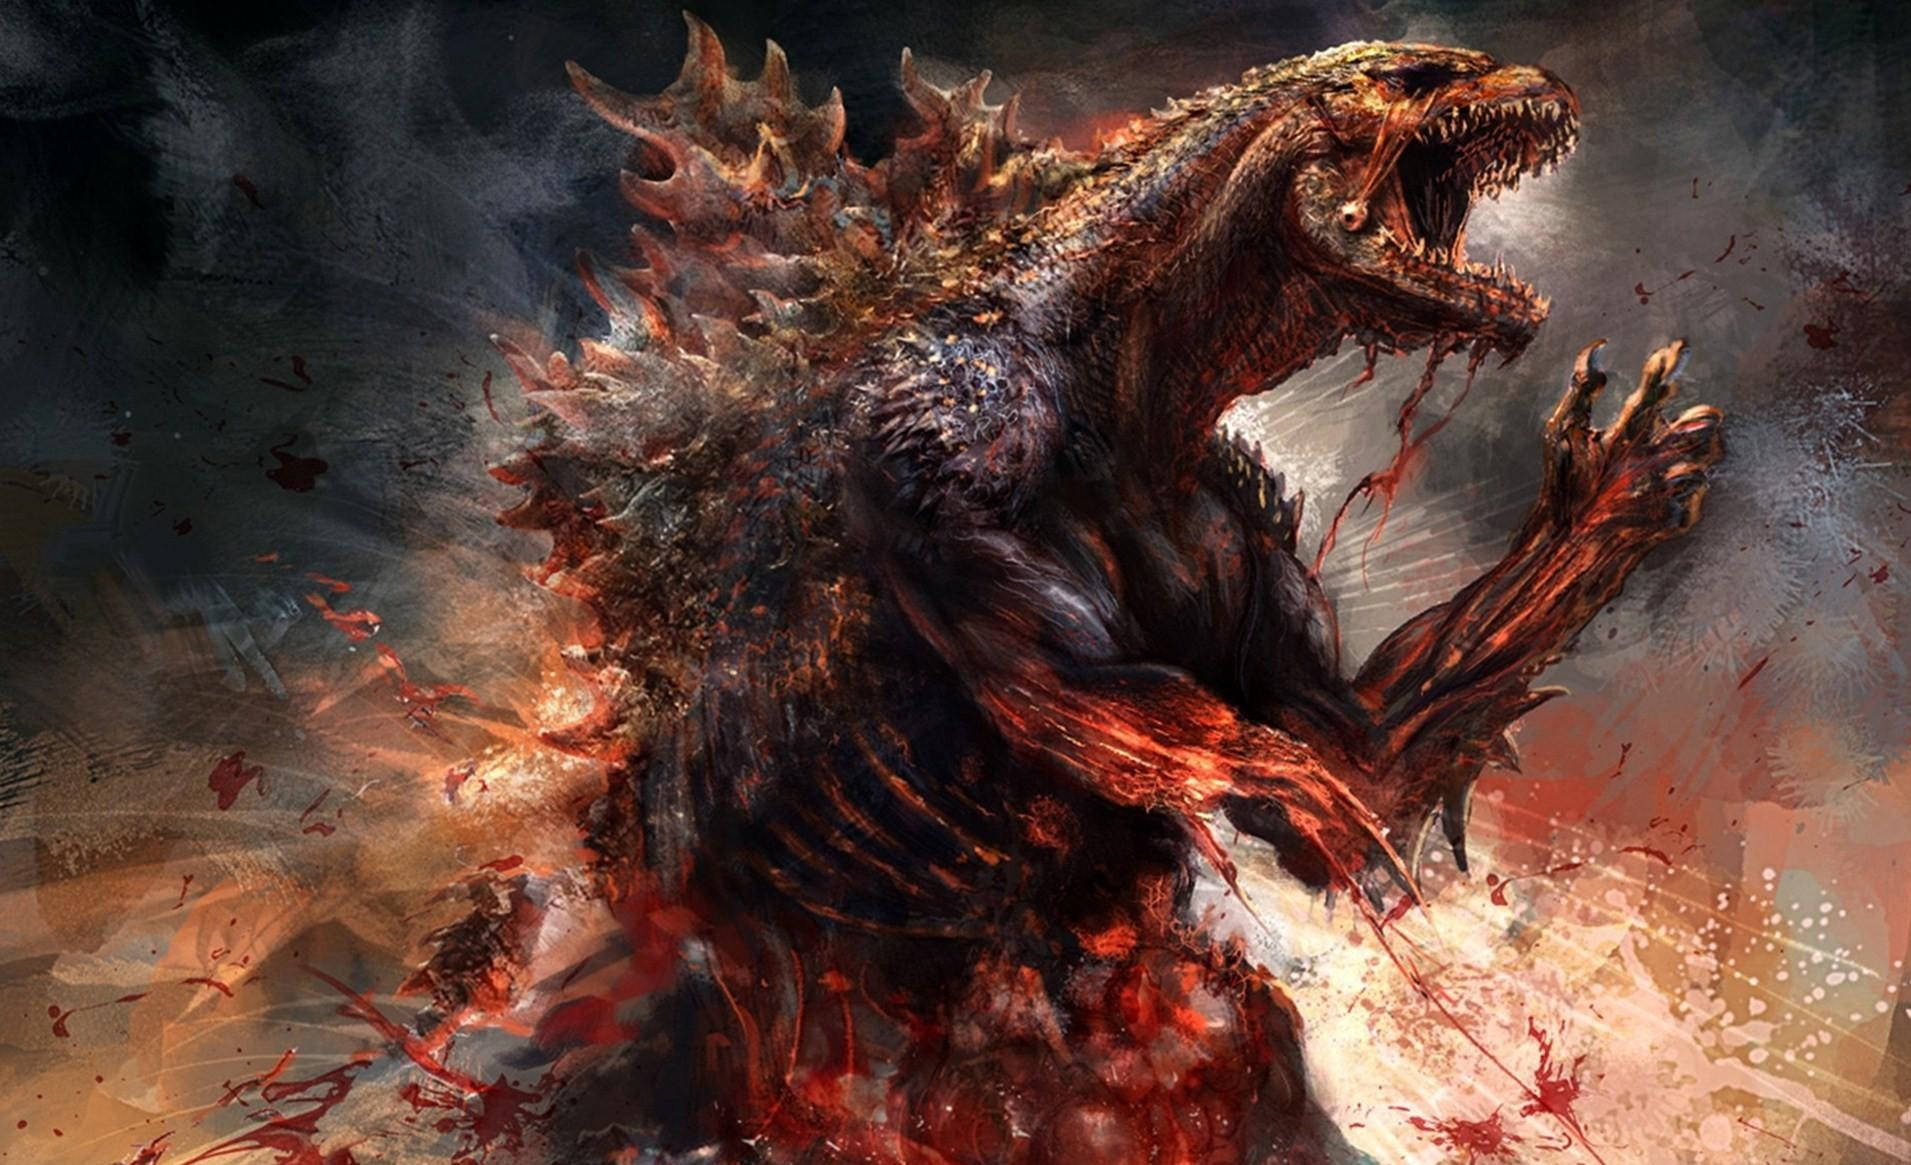 Shin Godzilla HighRes Photos Wallpaper by godzillaimage on DeviantArt